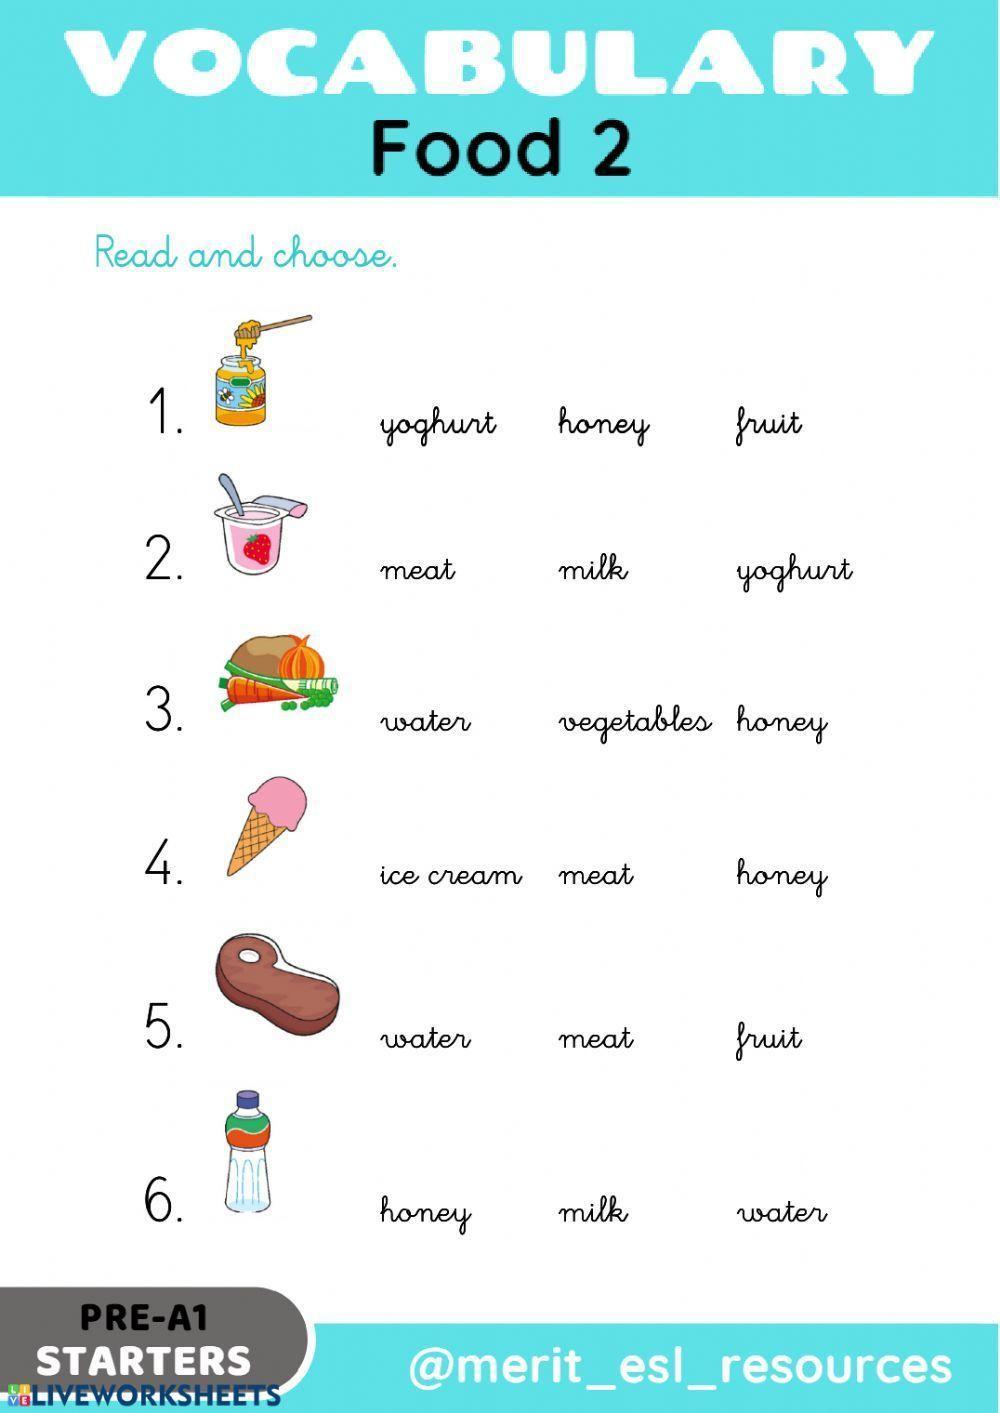 Vocabulary food 2